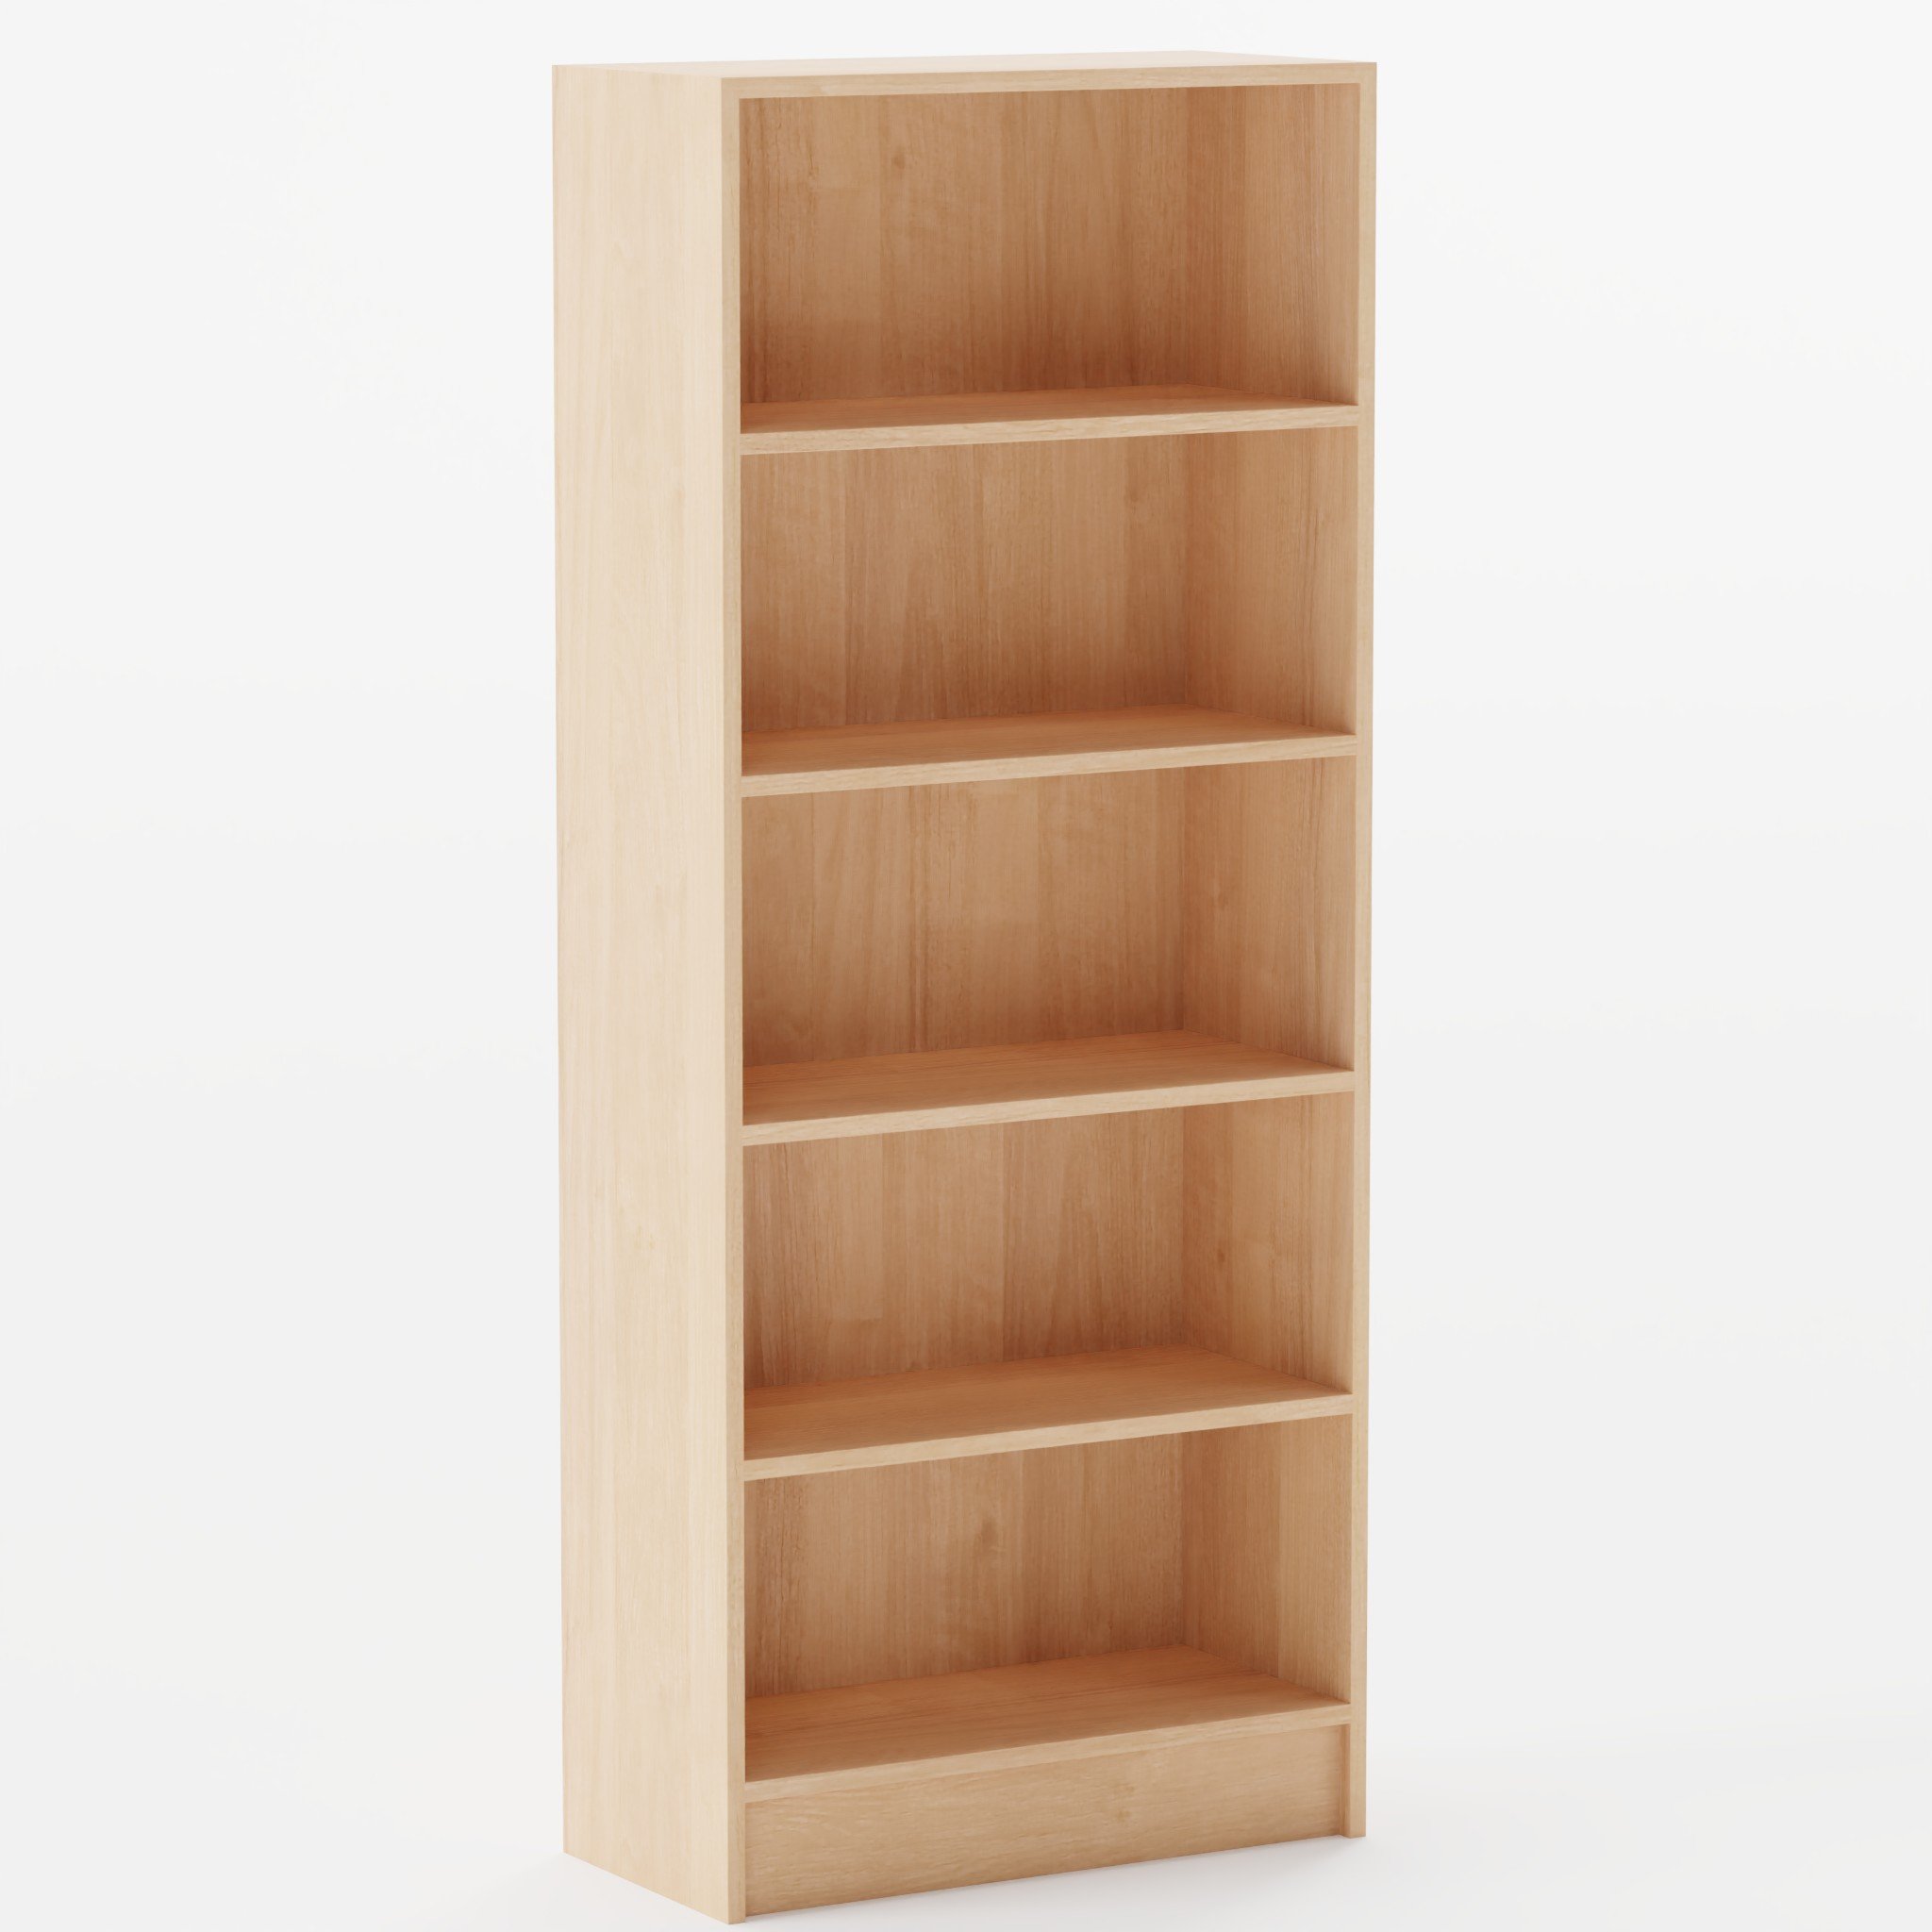 Office bookcase | FREE 3D Bookcase models | BlenderKit